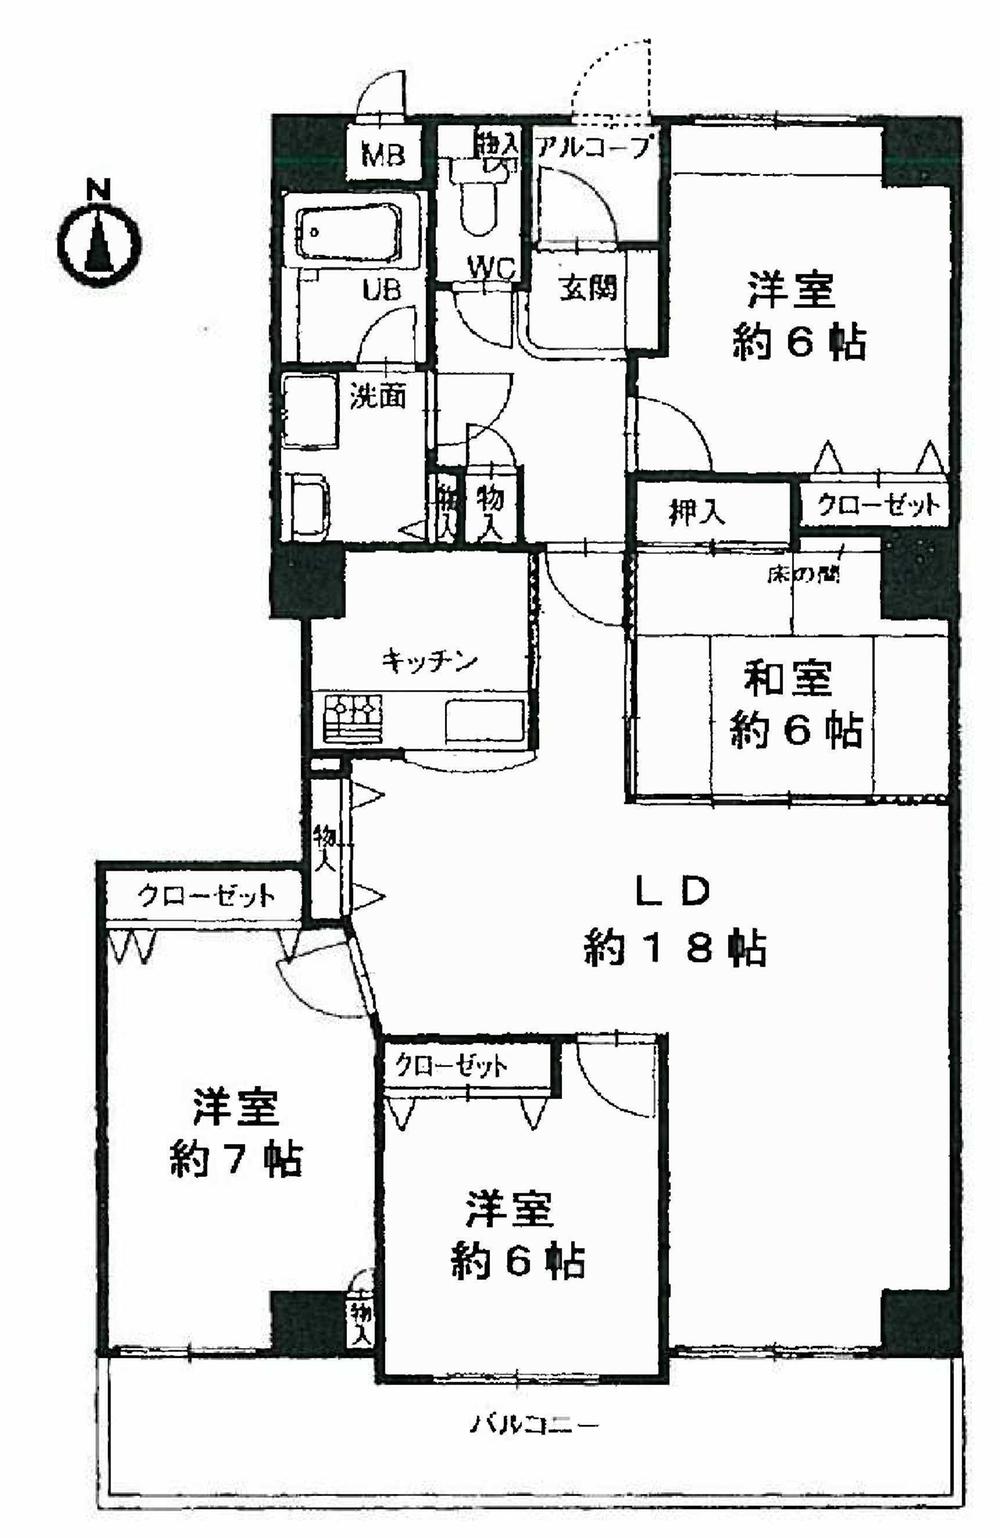 Floor plan. 4LDK, Price 17.5 million yen, Occupied area 91.01 sq m , Balcony area 19.2 sq m